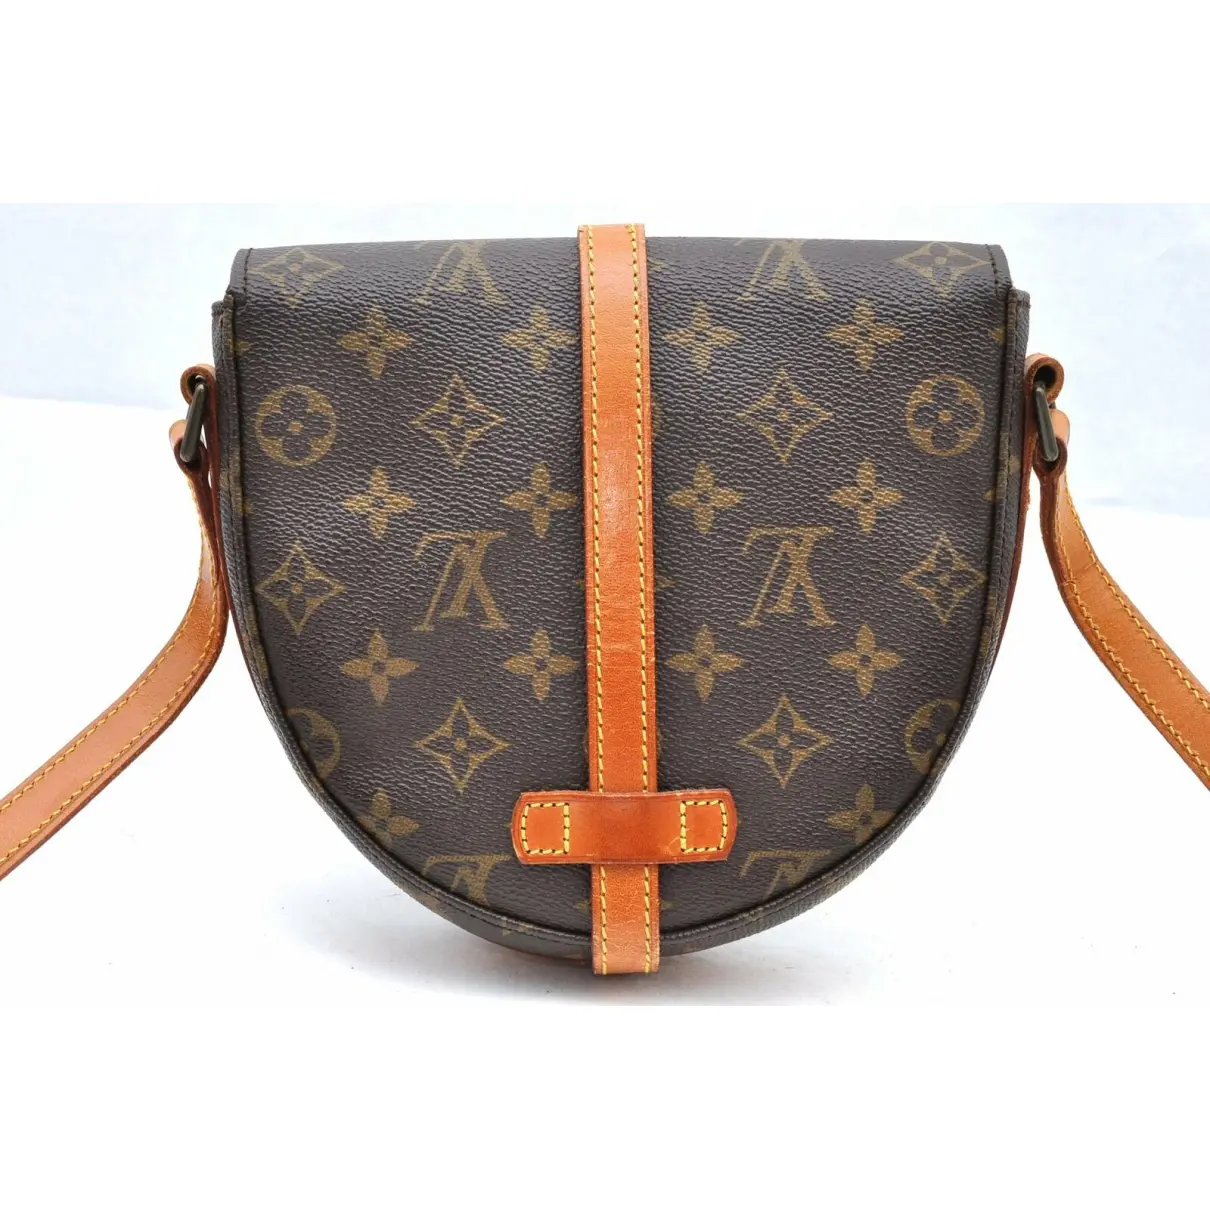 Buy Louis Vuitton Chantilly cloth handbag online